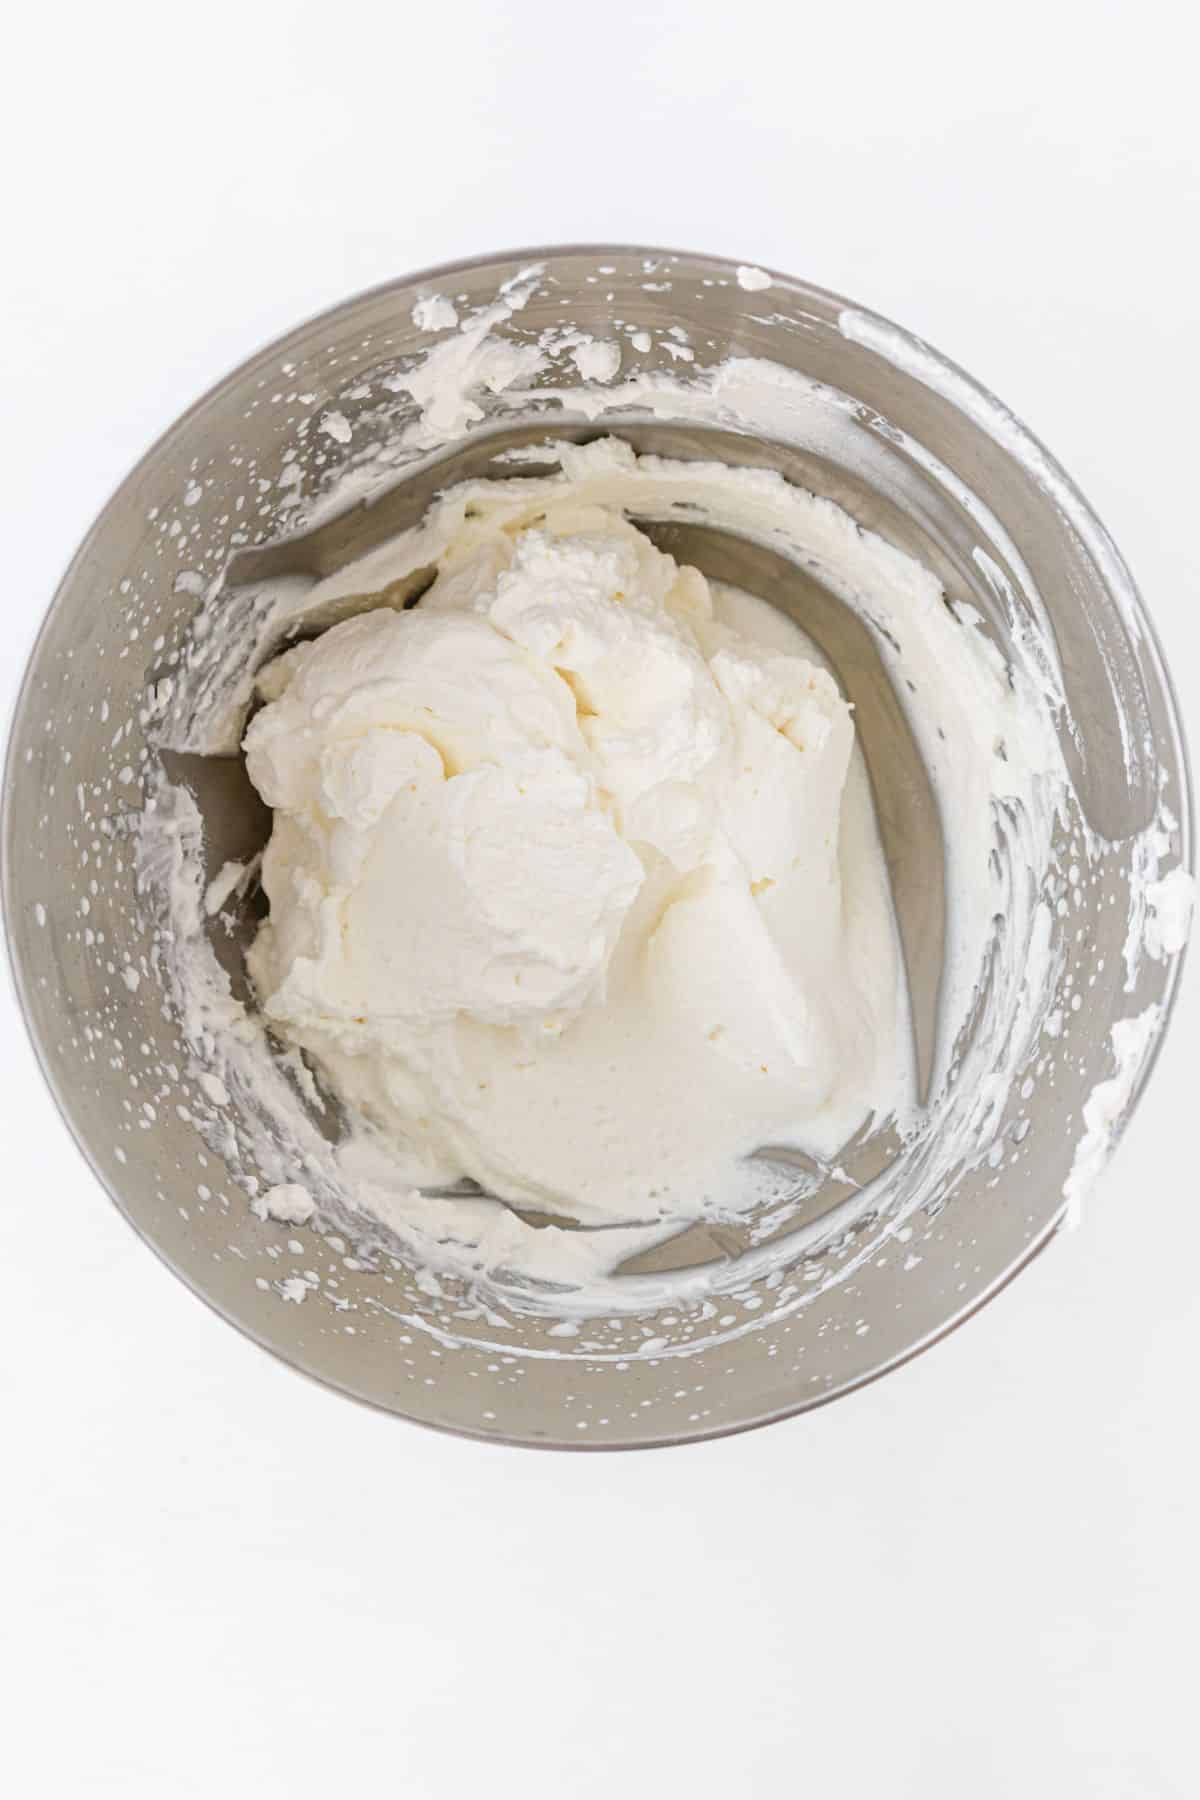 cream beaten to stiff peaks in a mixing bowl